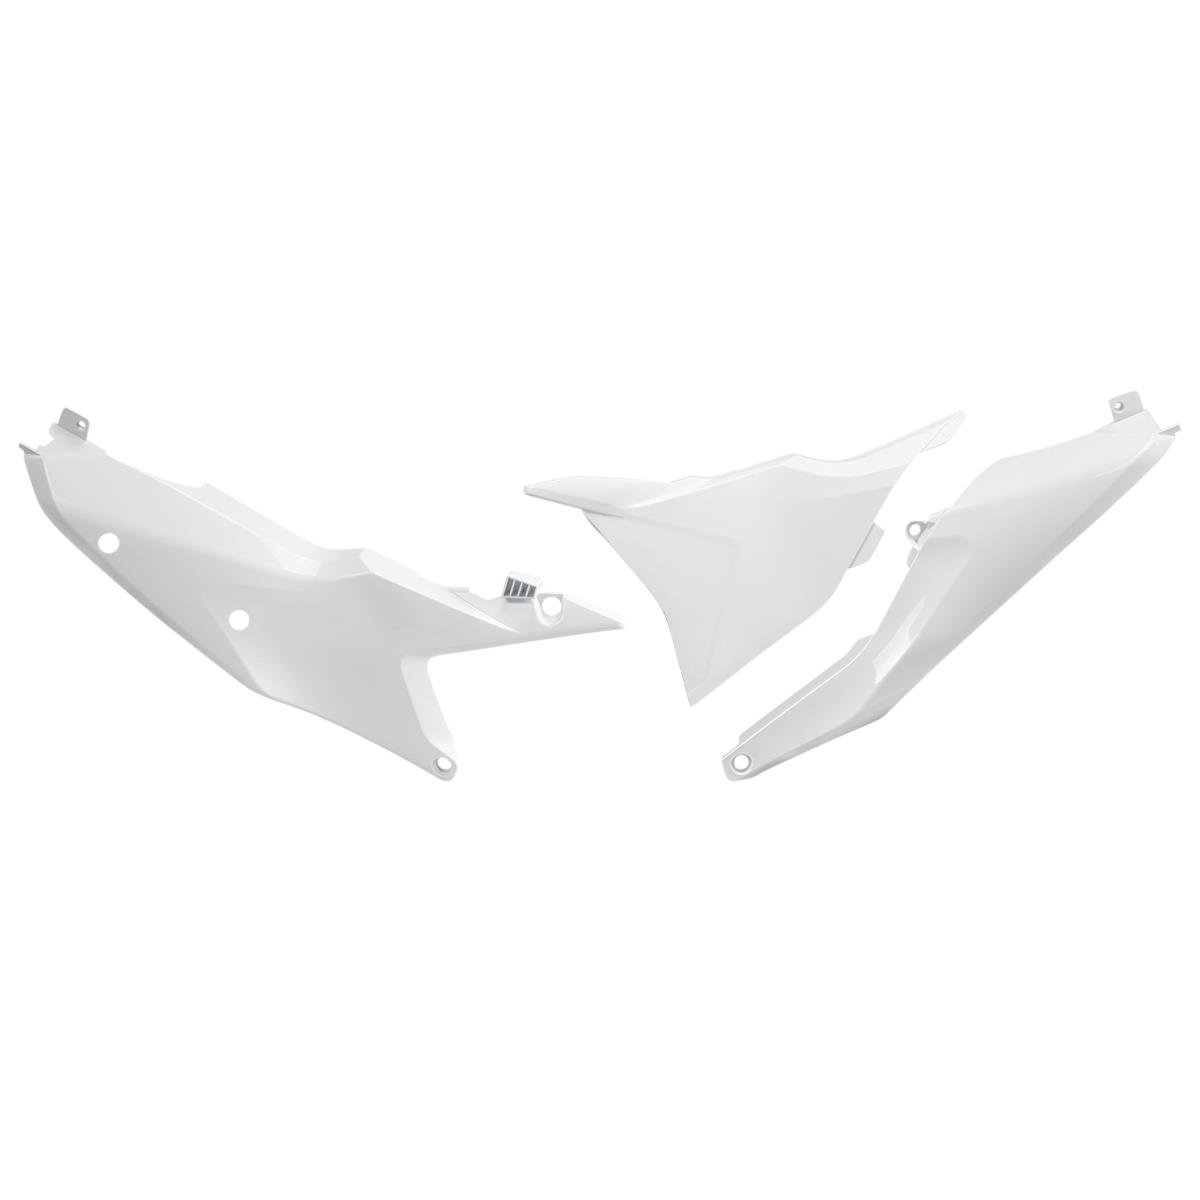 Ufo Plast Plaques Latérales  KTM SX/SX-F 23-, EXC/-F 24-, Blanc